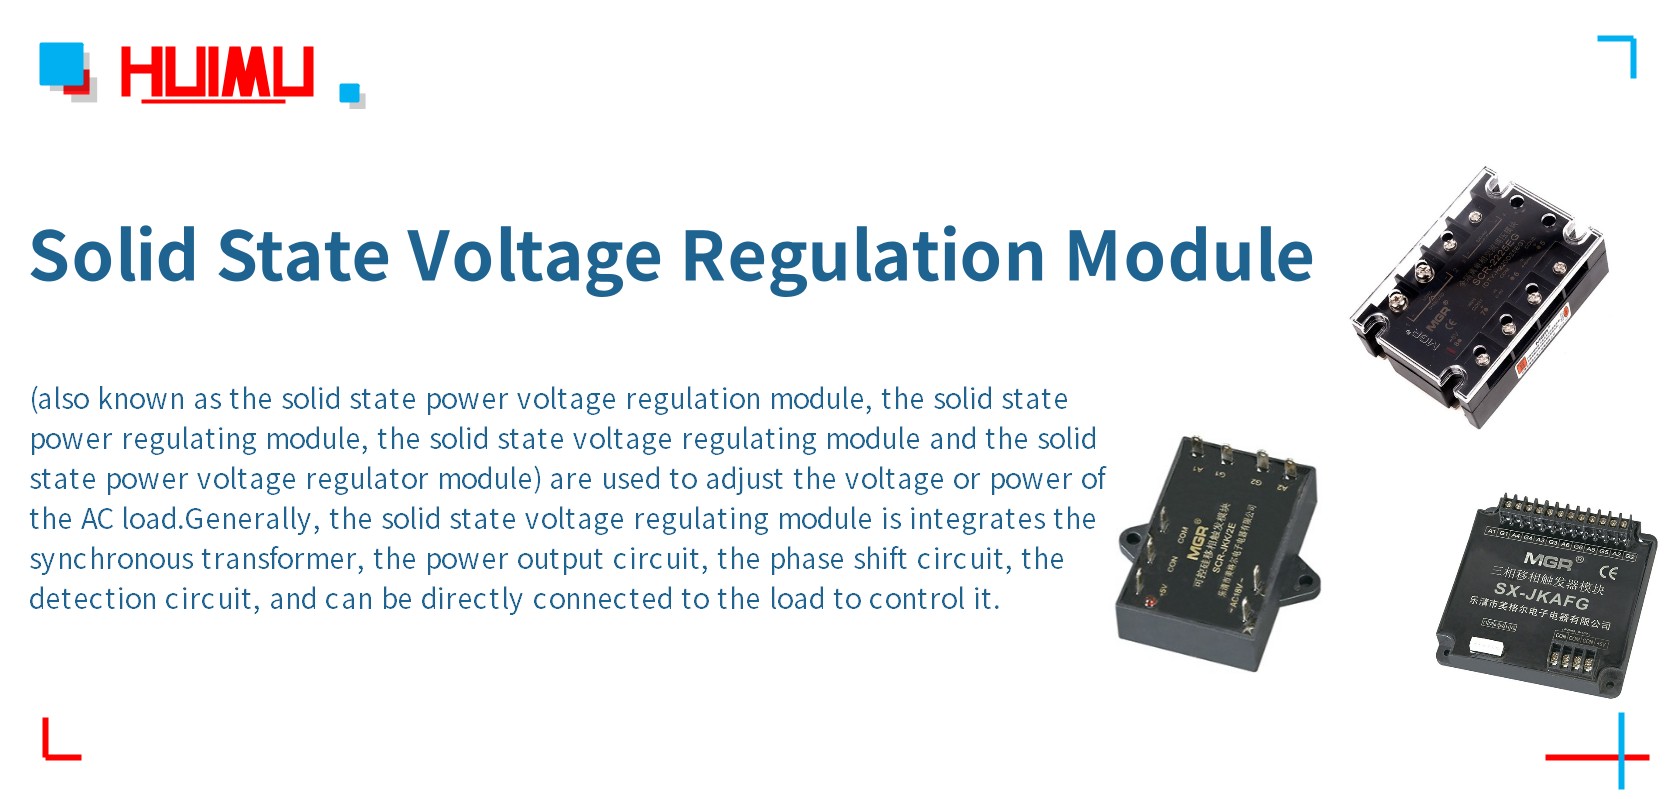 What is Solid State Voltage Regulation Module? More detail via www.@huimultd.com